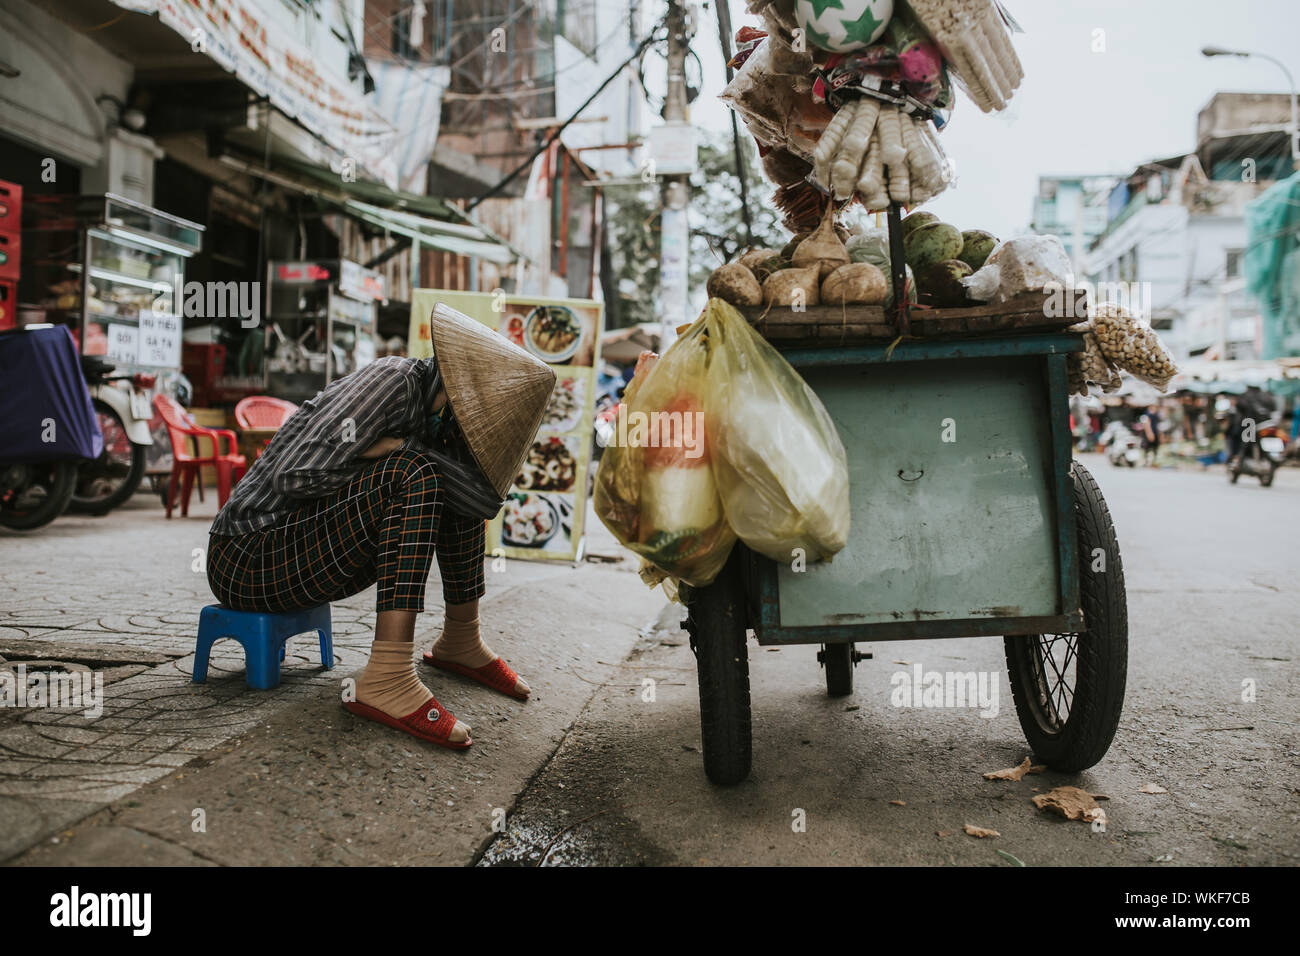 SAIGON, VIETNAM - OCTOBER 31, 2016: People on the streets of Saigon on October 31, 2016, Vietnam. Stock Photo